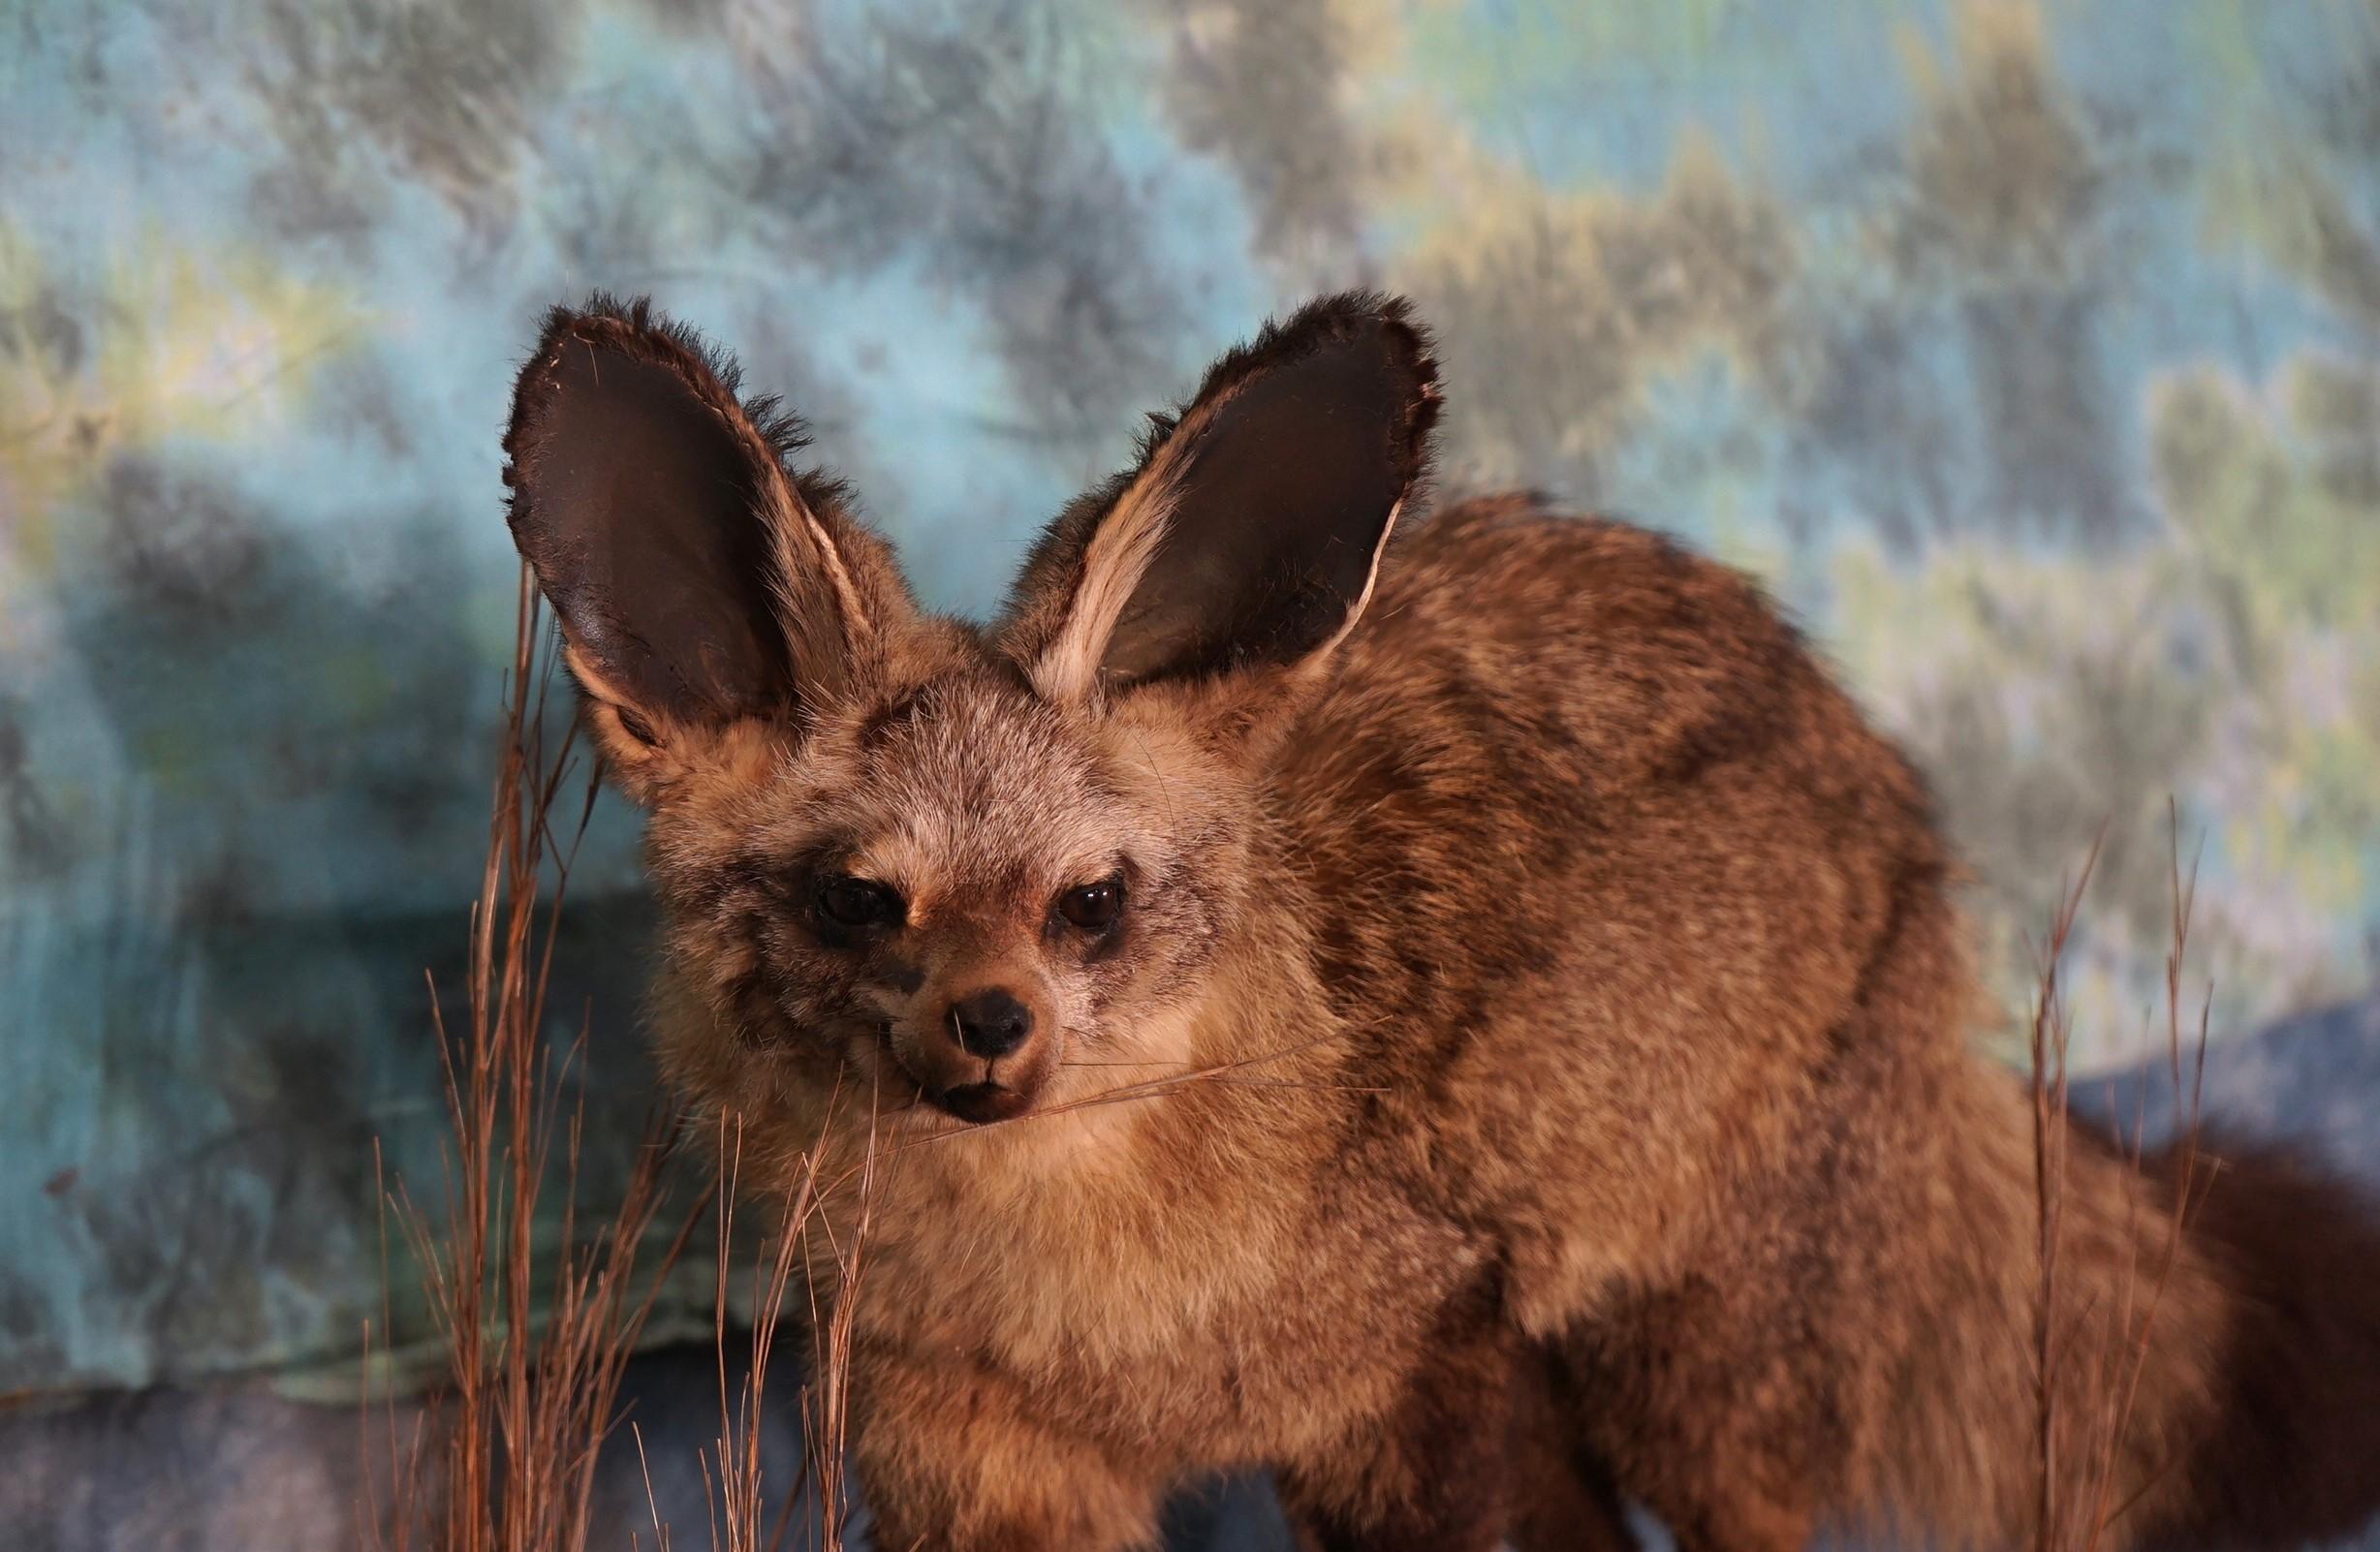 Rare African Bat-Eared Fox Full Body Taxidermy Mount